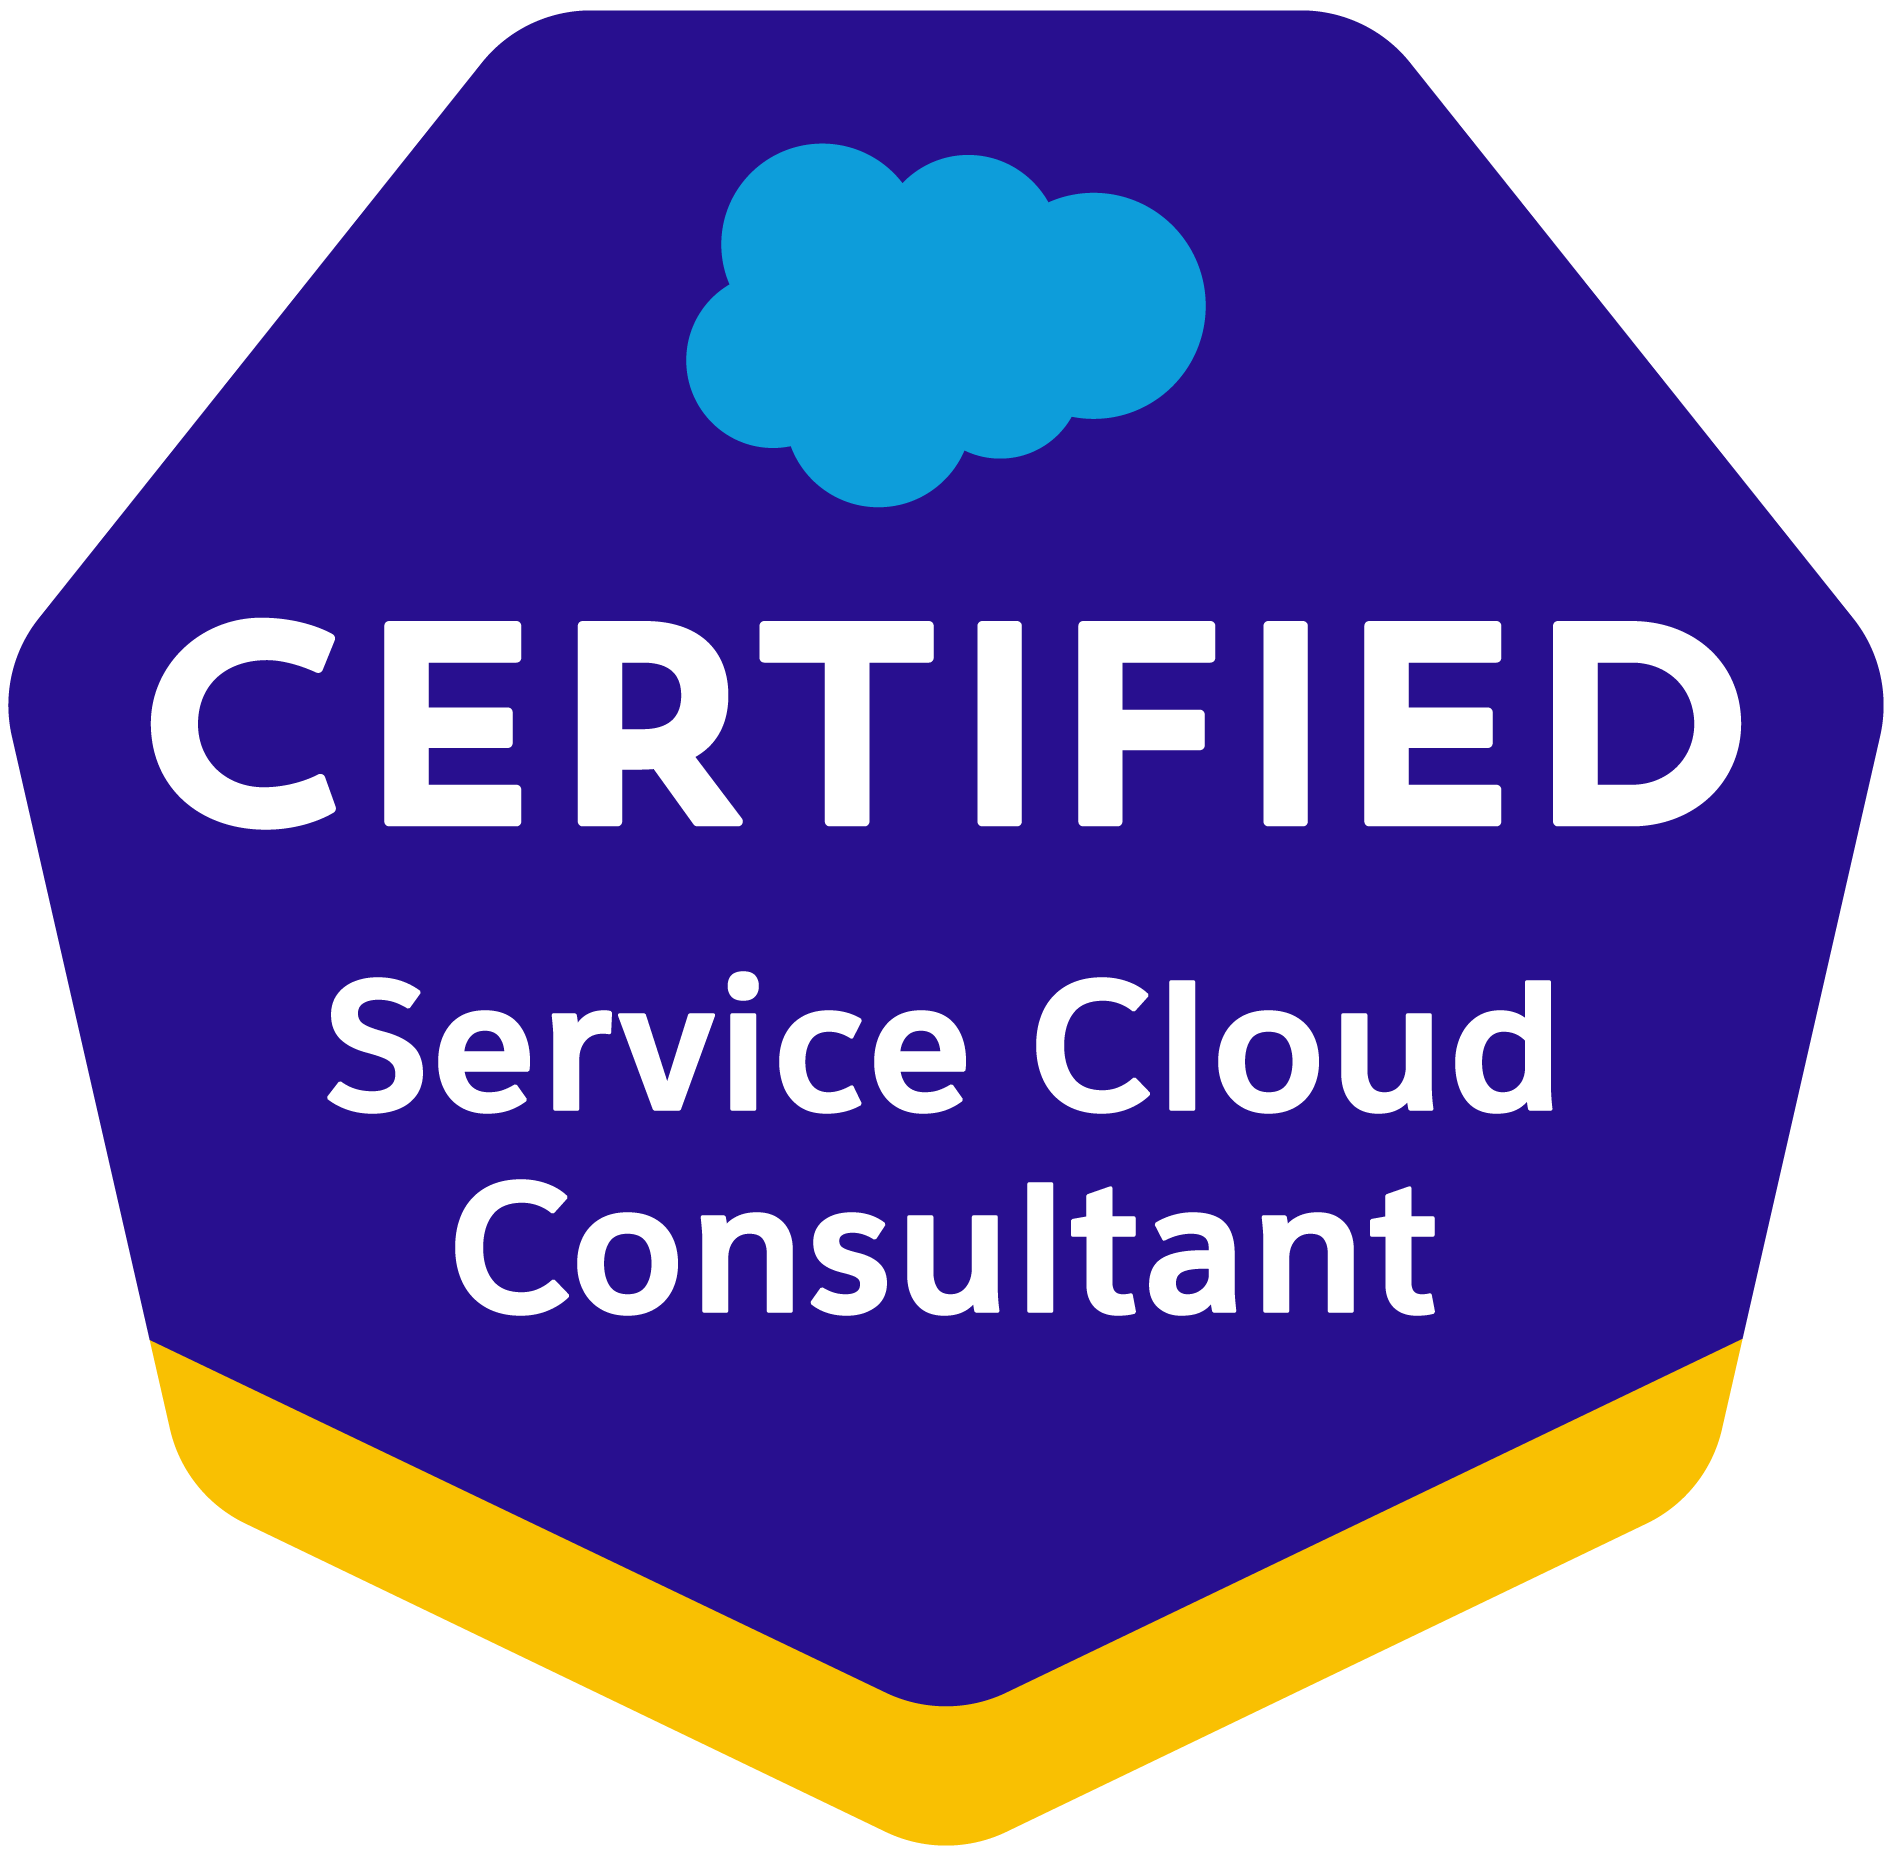 Service cloud consultant